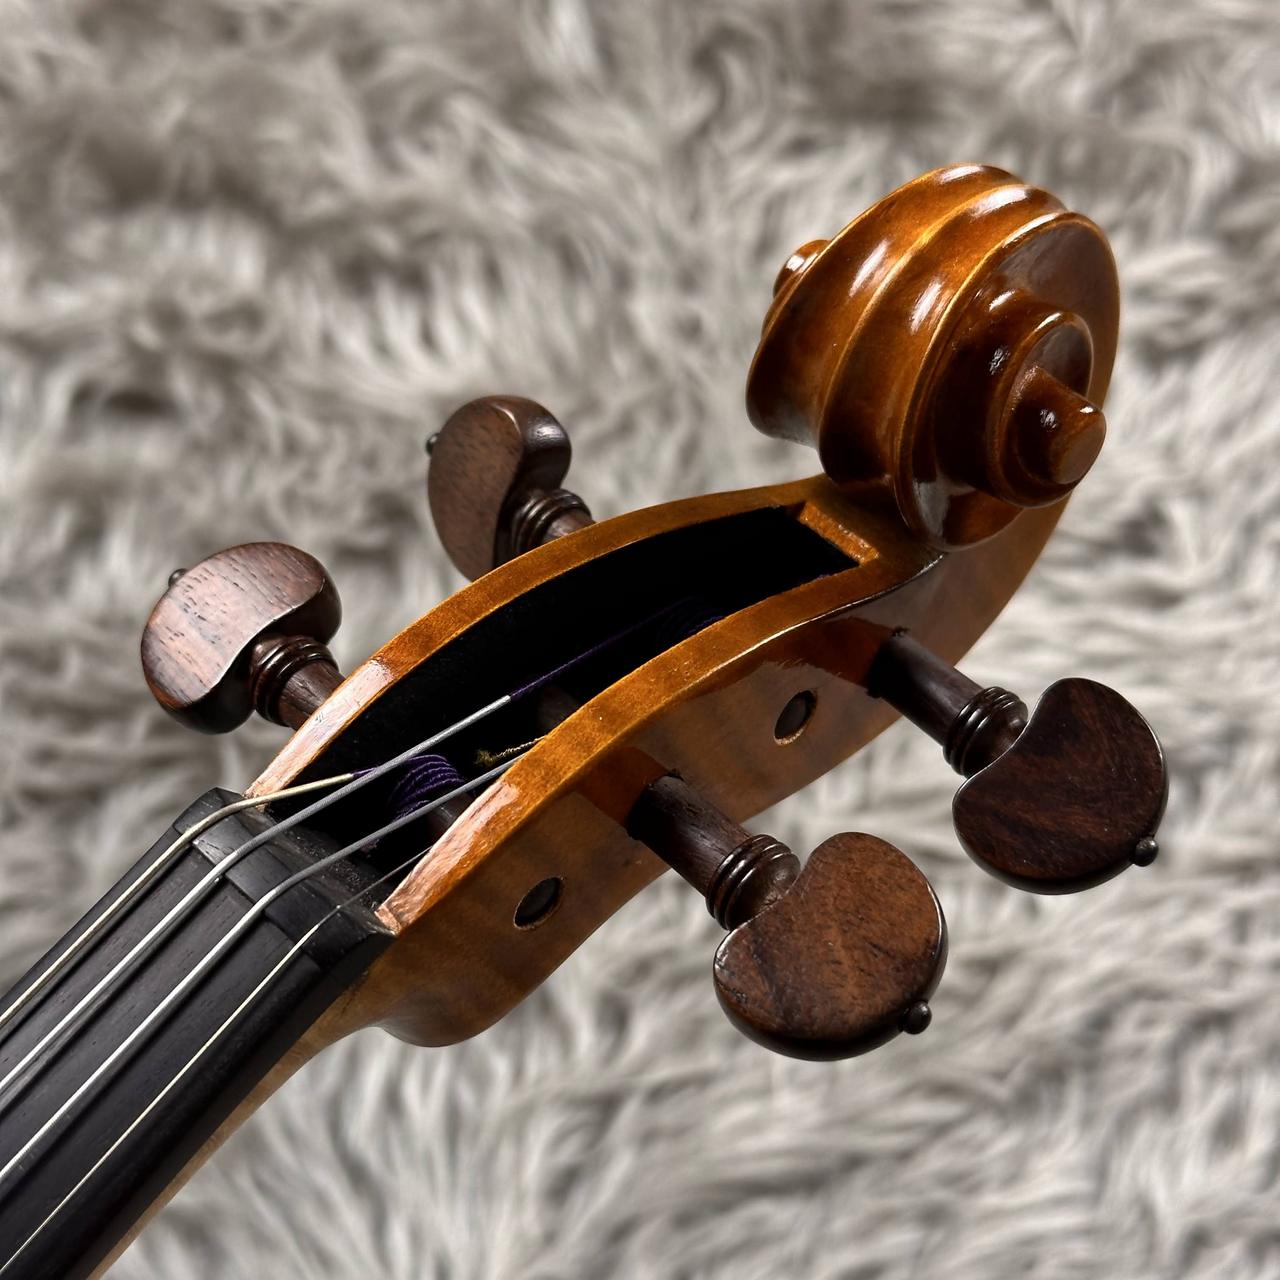 SALE新品質屋 器 バイオリン HEINRICH GILL ハインリッヒ ギル No.52 anno 2018 カーボンマック CFV-2S ハードケース付き みいち質店 バイオリン